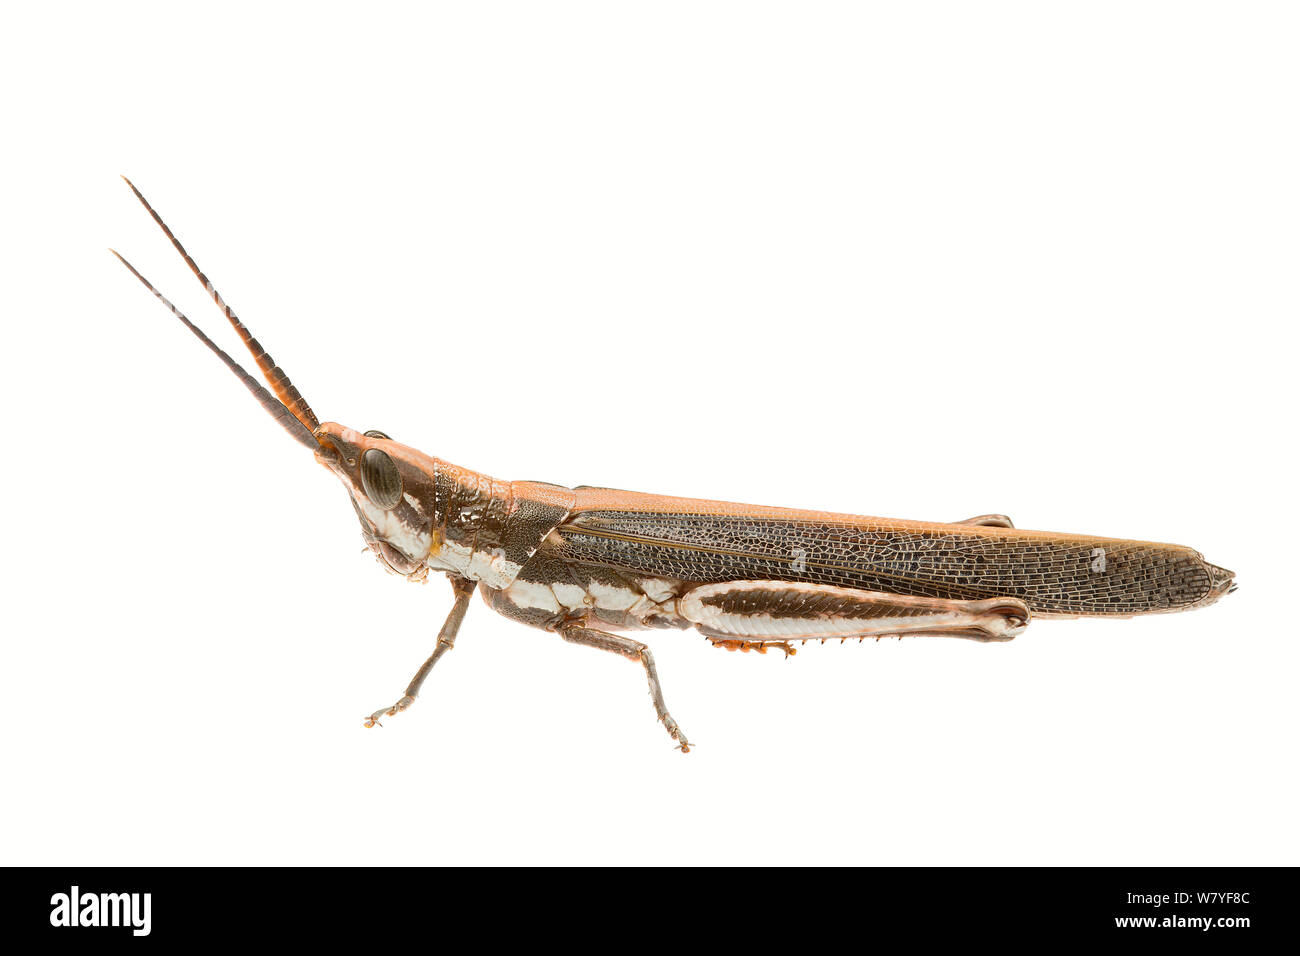 Erfreulich Grasshopper (Erythropomala amaena), meekatharra Shire, Gascoyne Bioregion, Western Australien. meetyourneighbors.net Projekt Stockfoto